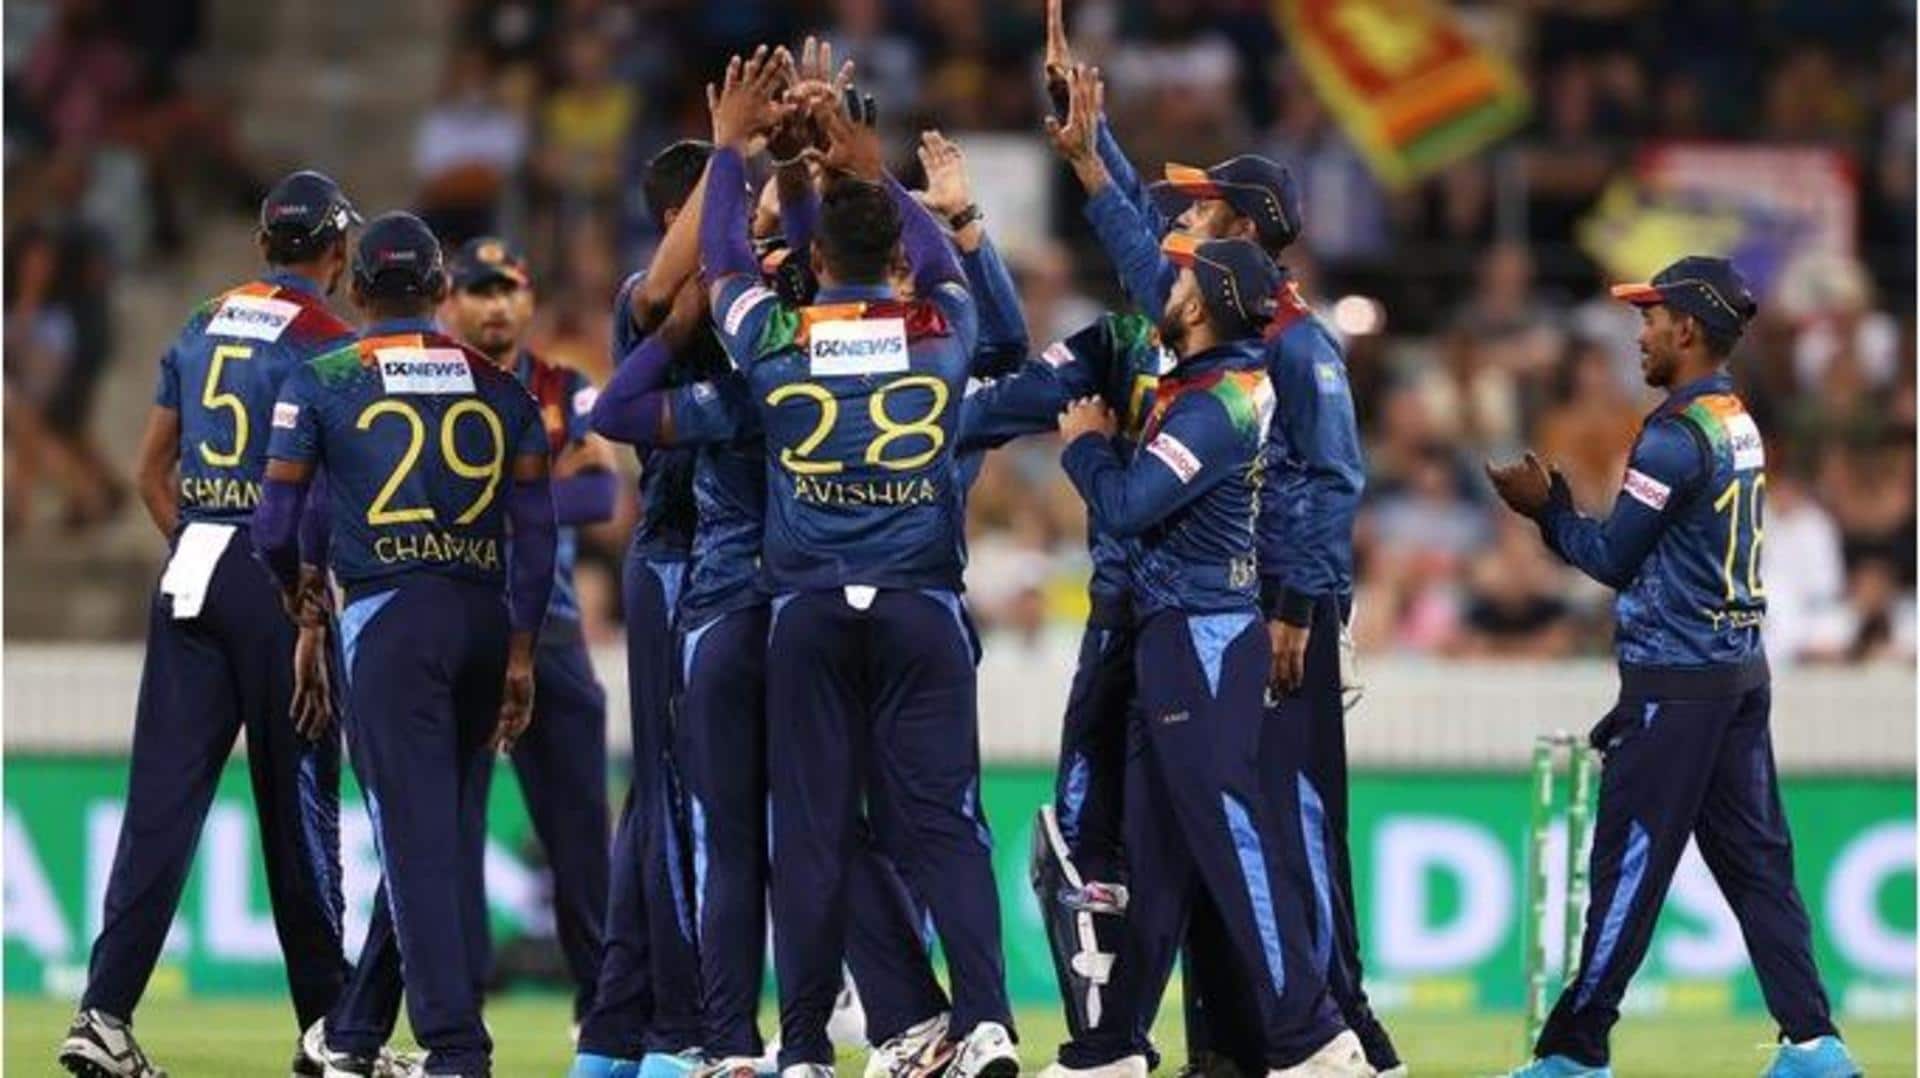 Sri Lanka vs Afghanistan ODIs: All you need to know